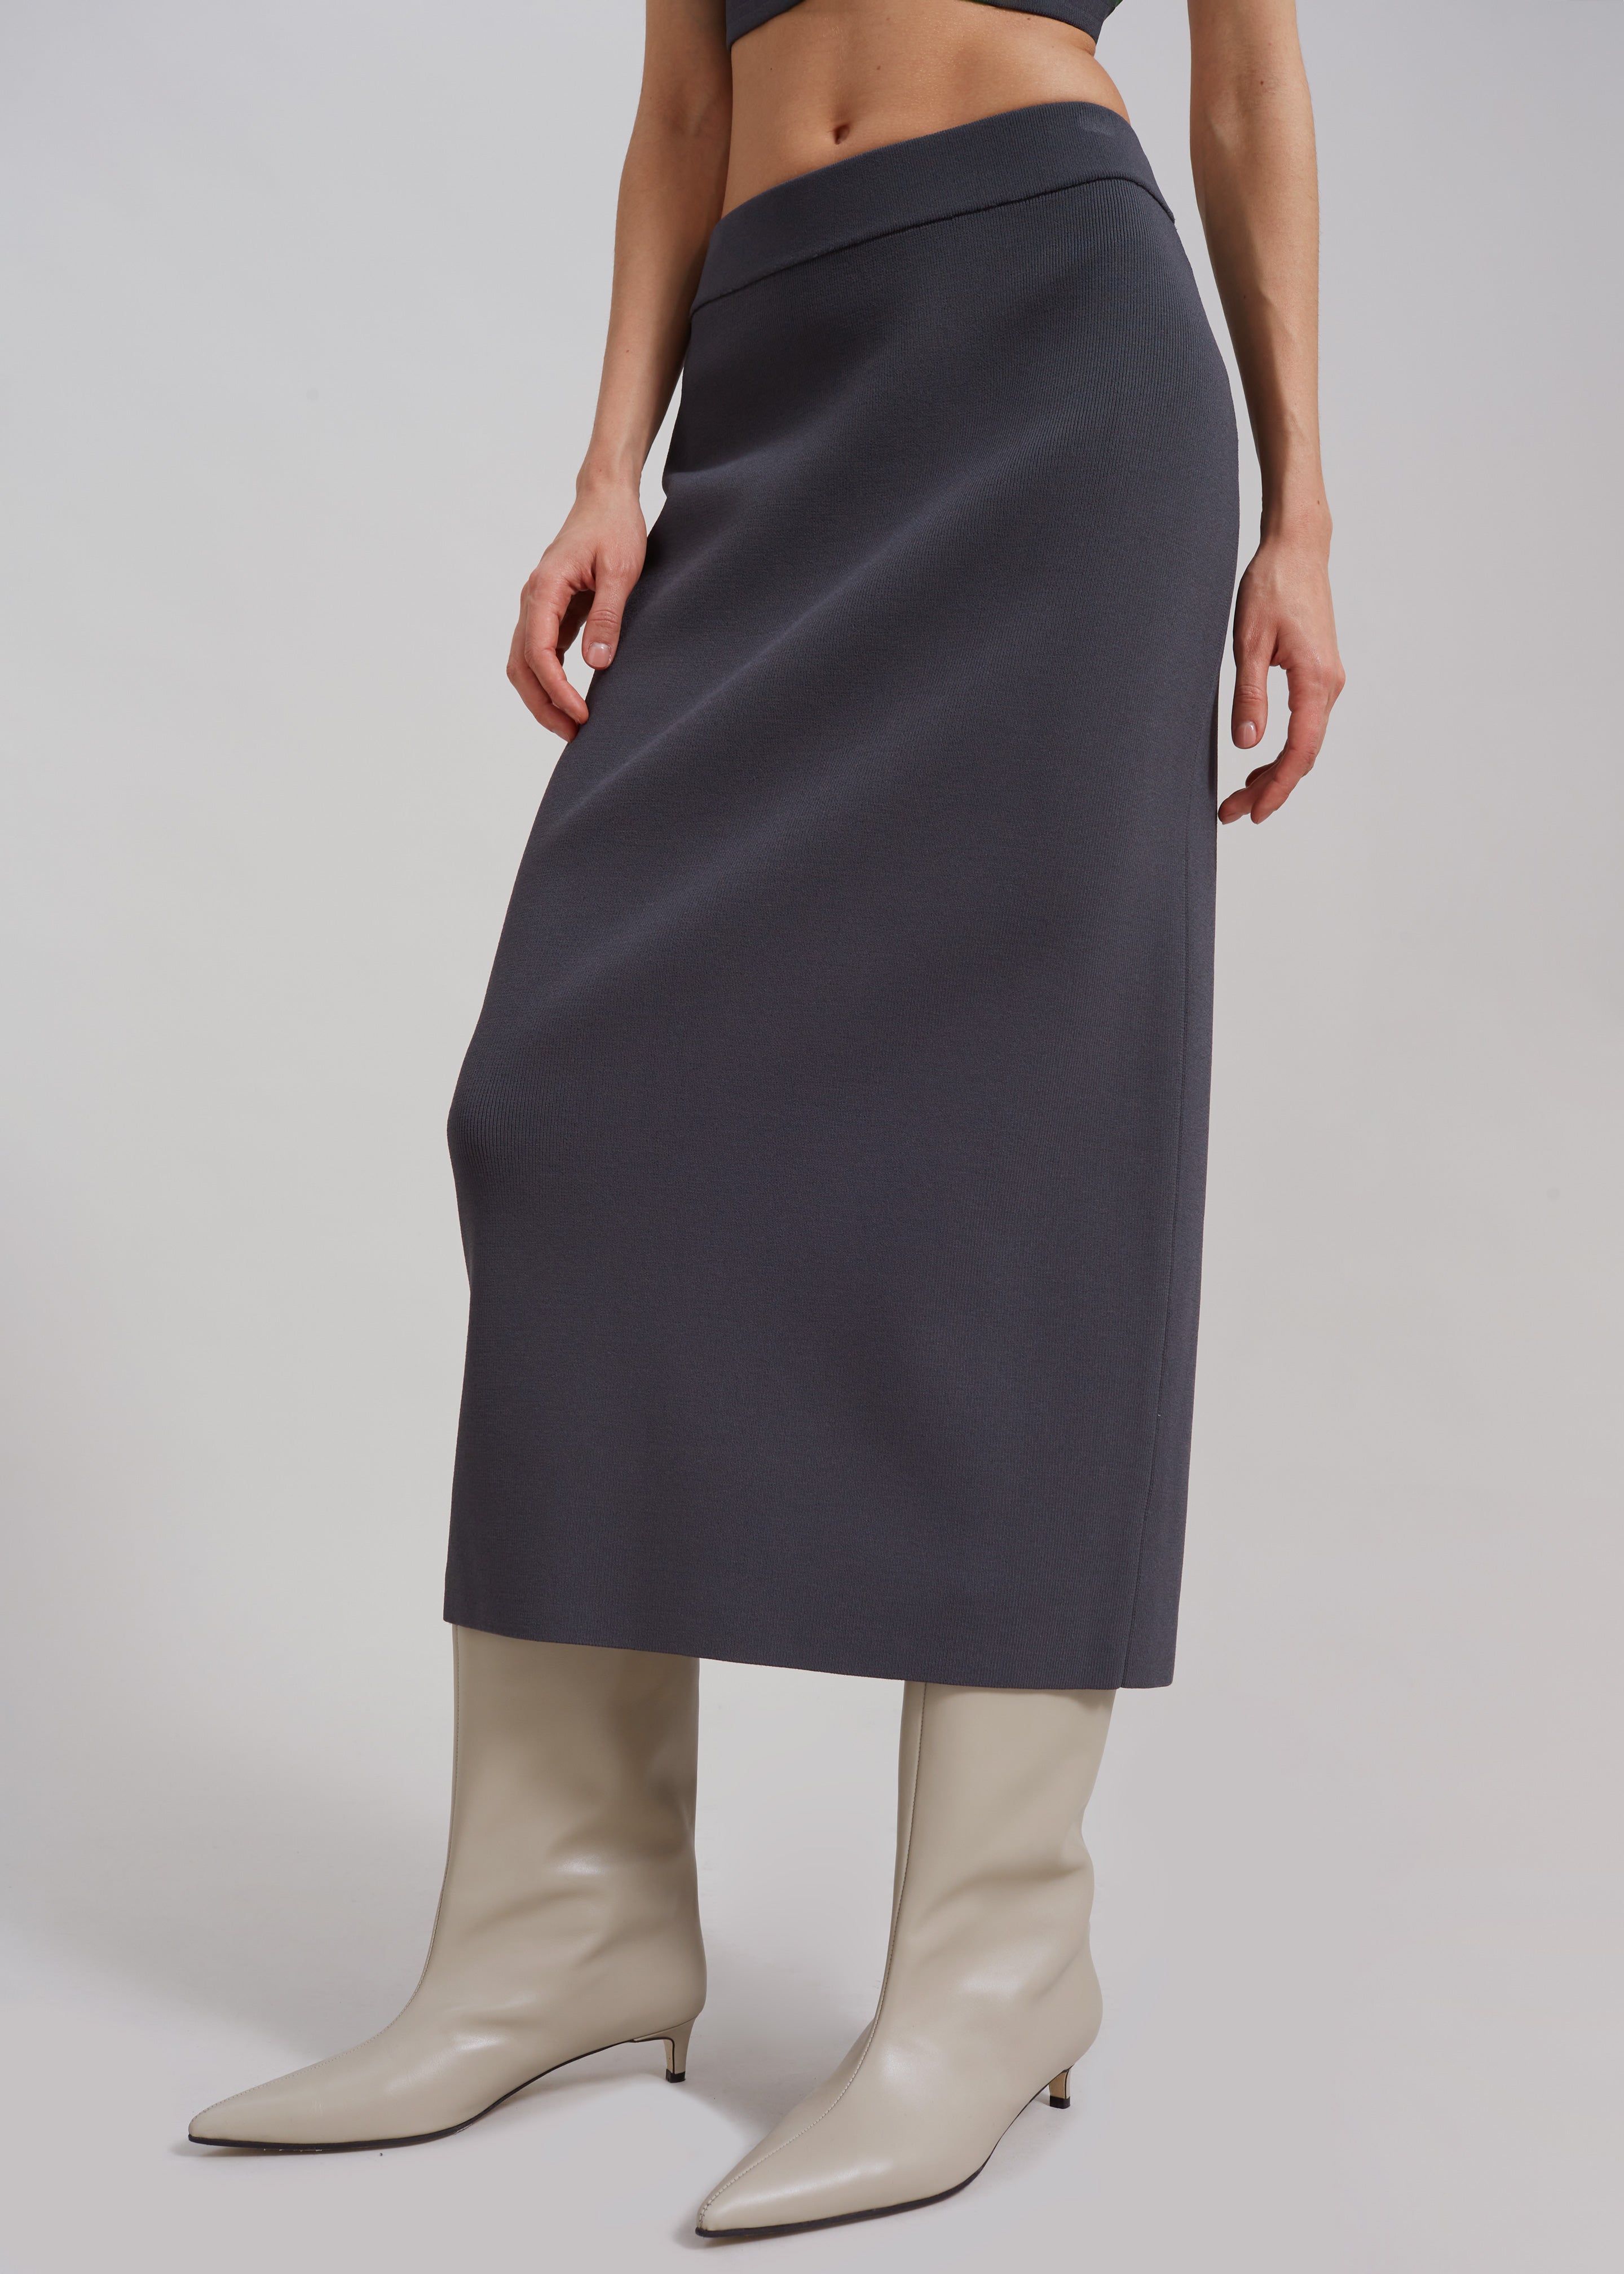 Solange Knit Pencil Skirt - Grey - 2